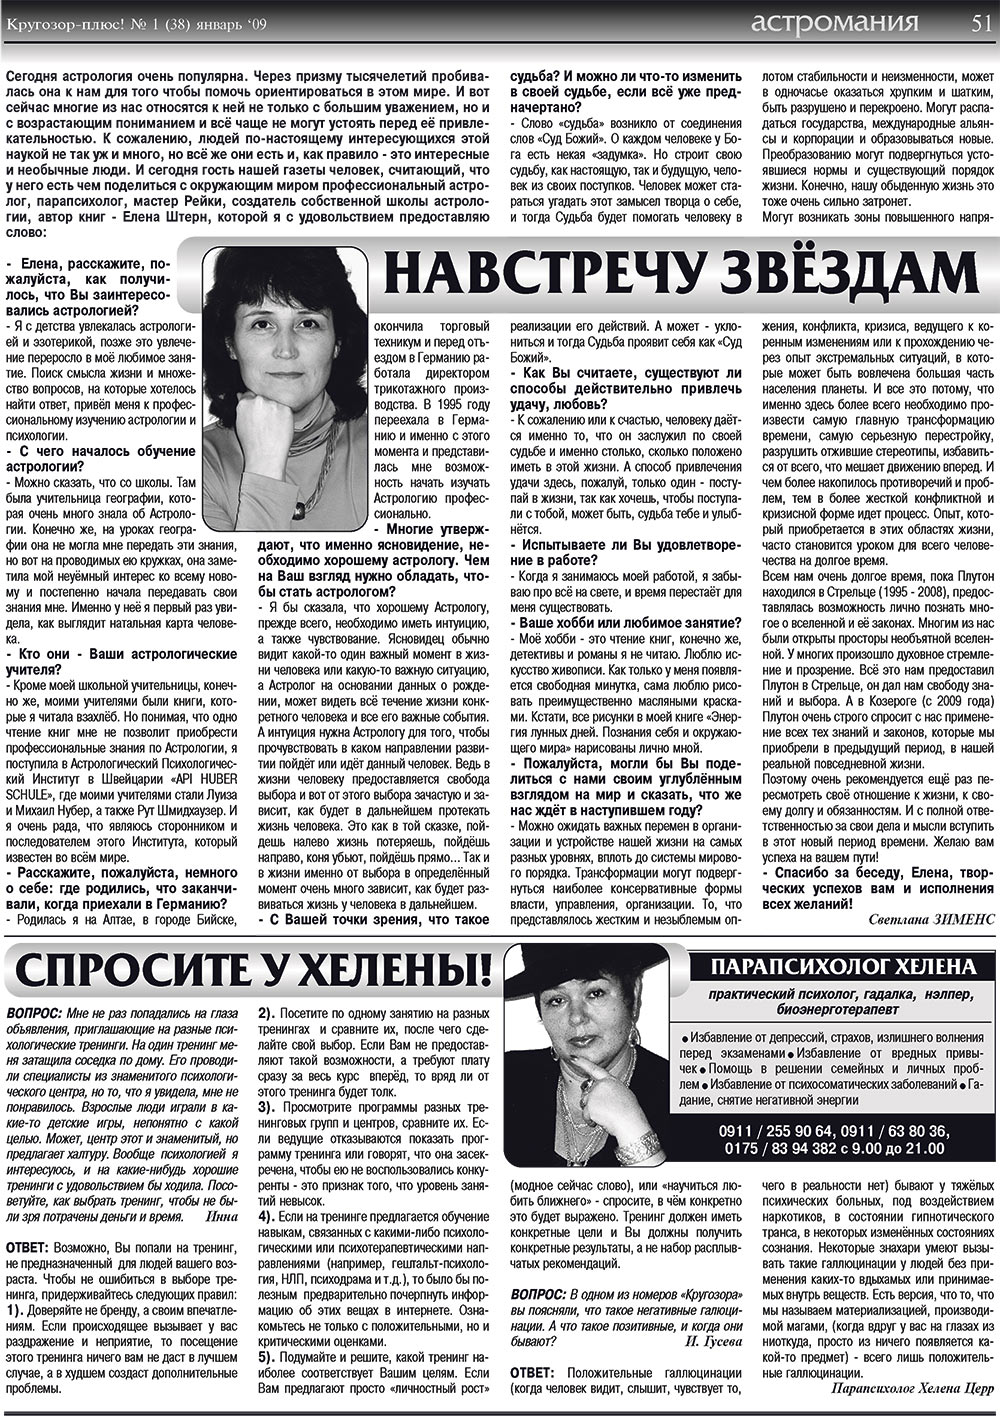 Кругозор плюс! (газета). 2009 год, номер 1, стр. 51